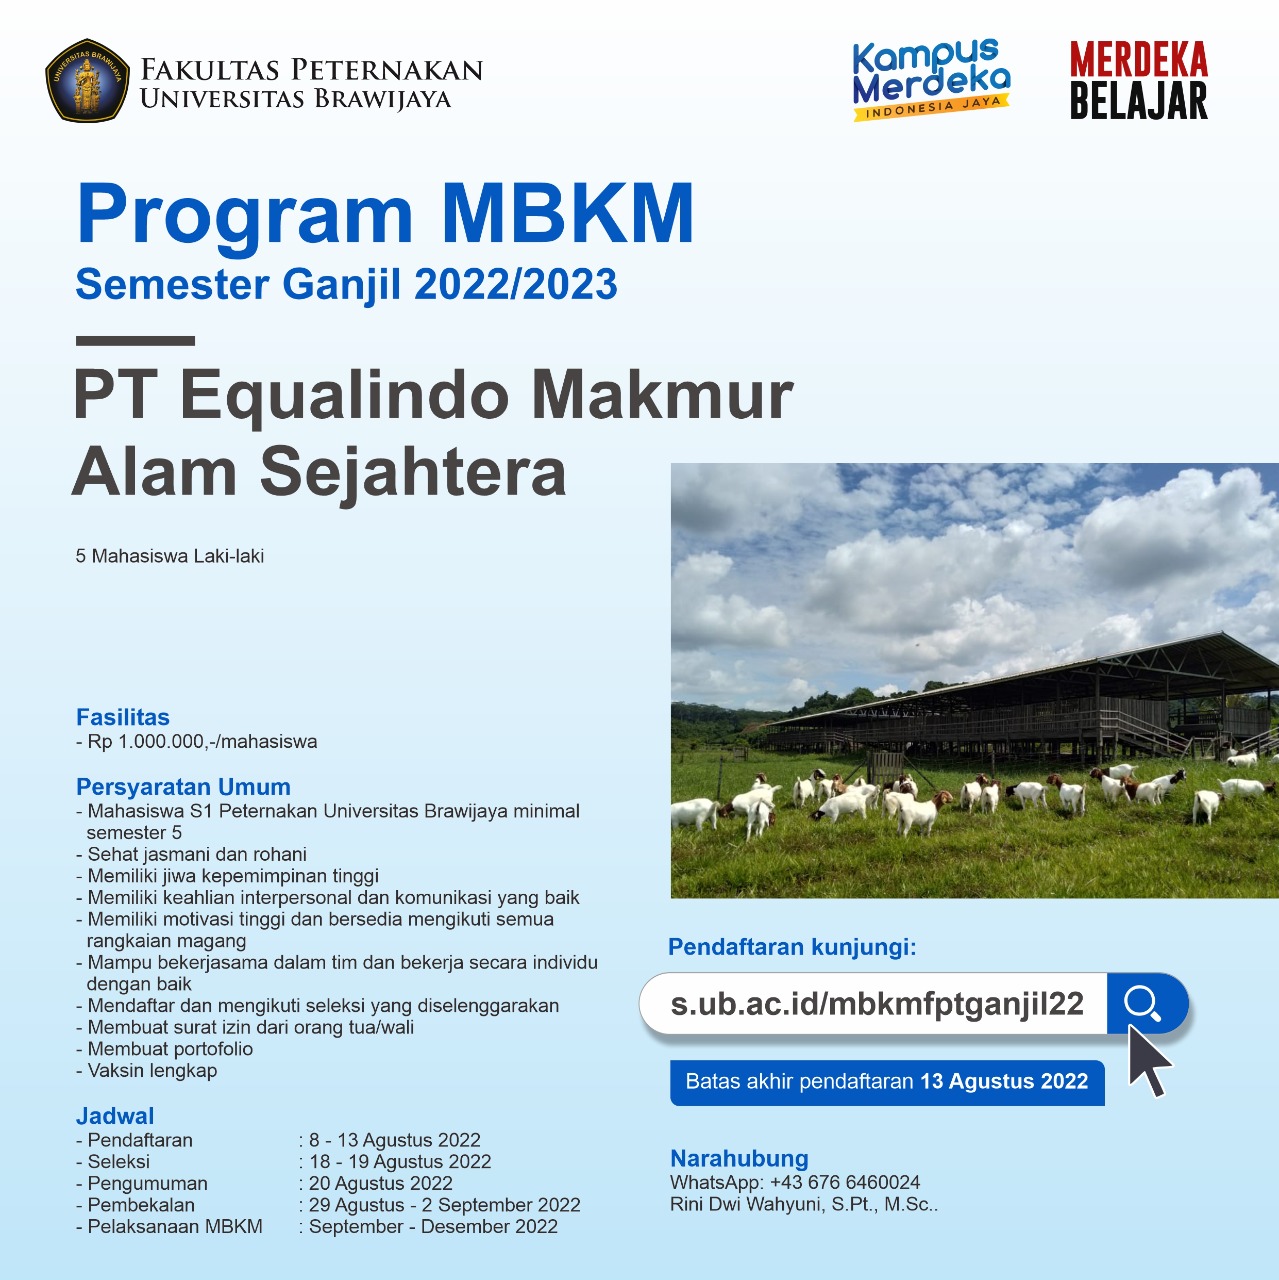 Program MBKM Semester Ganjil 2022/2023 PT. Equalindo Makmur Alam Sejahtera